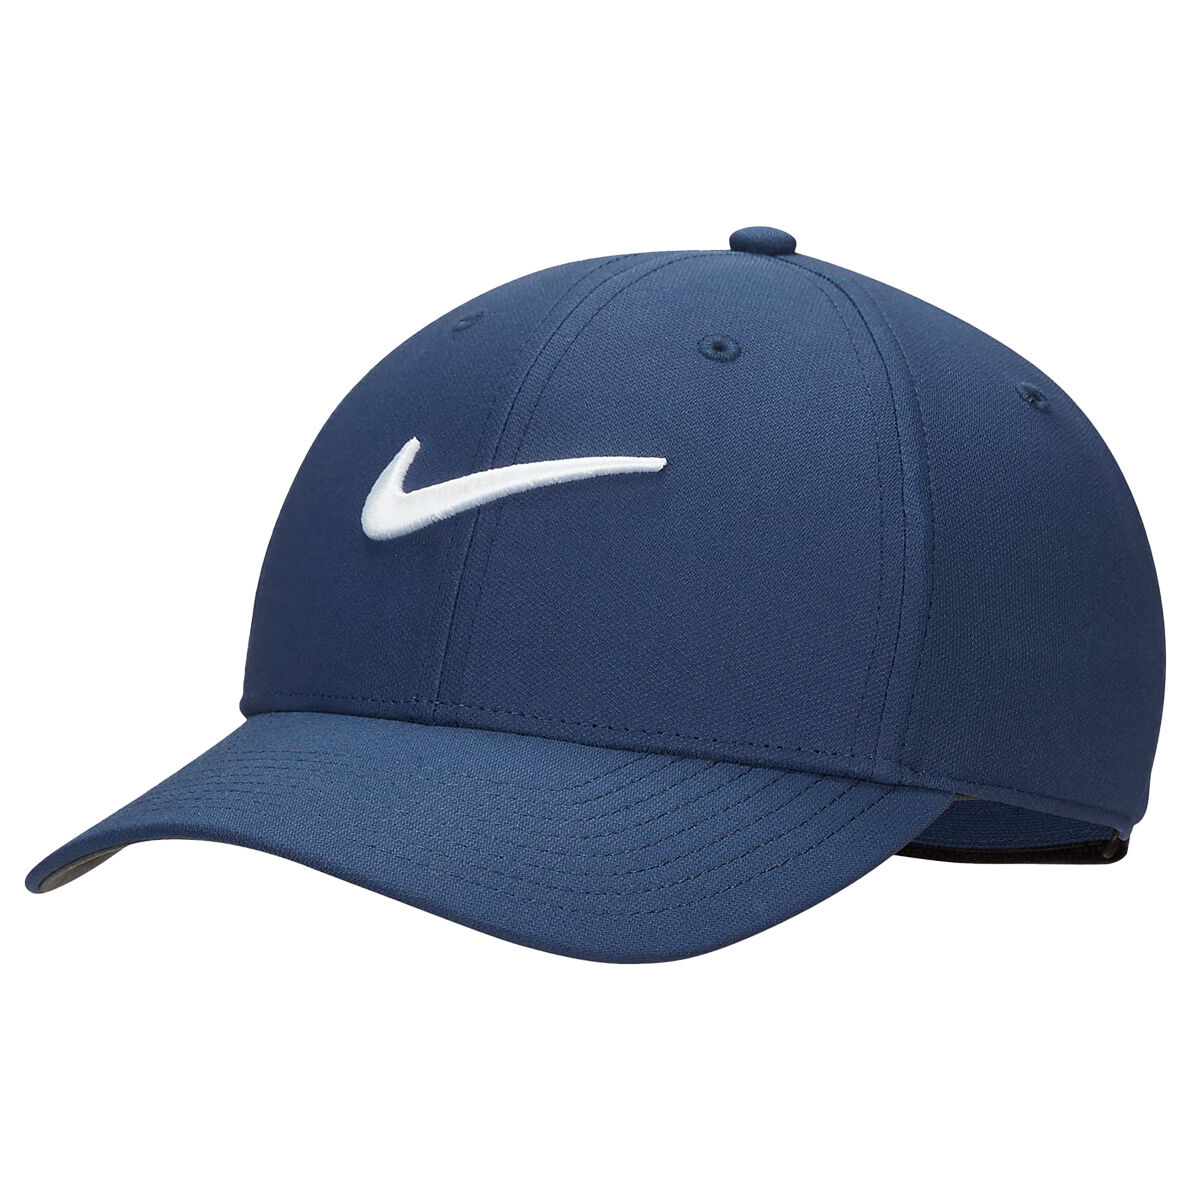 Nike Men’s Structured Swoosh Golf Cap, Mens, Midnight navy/white, Medium/large | American Golf